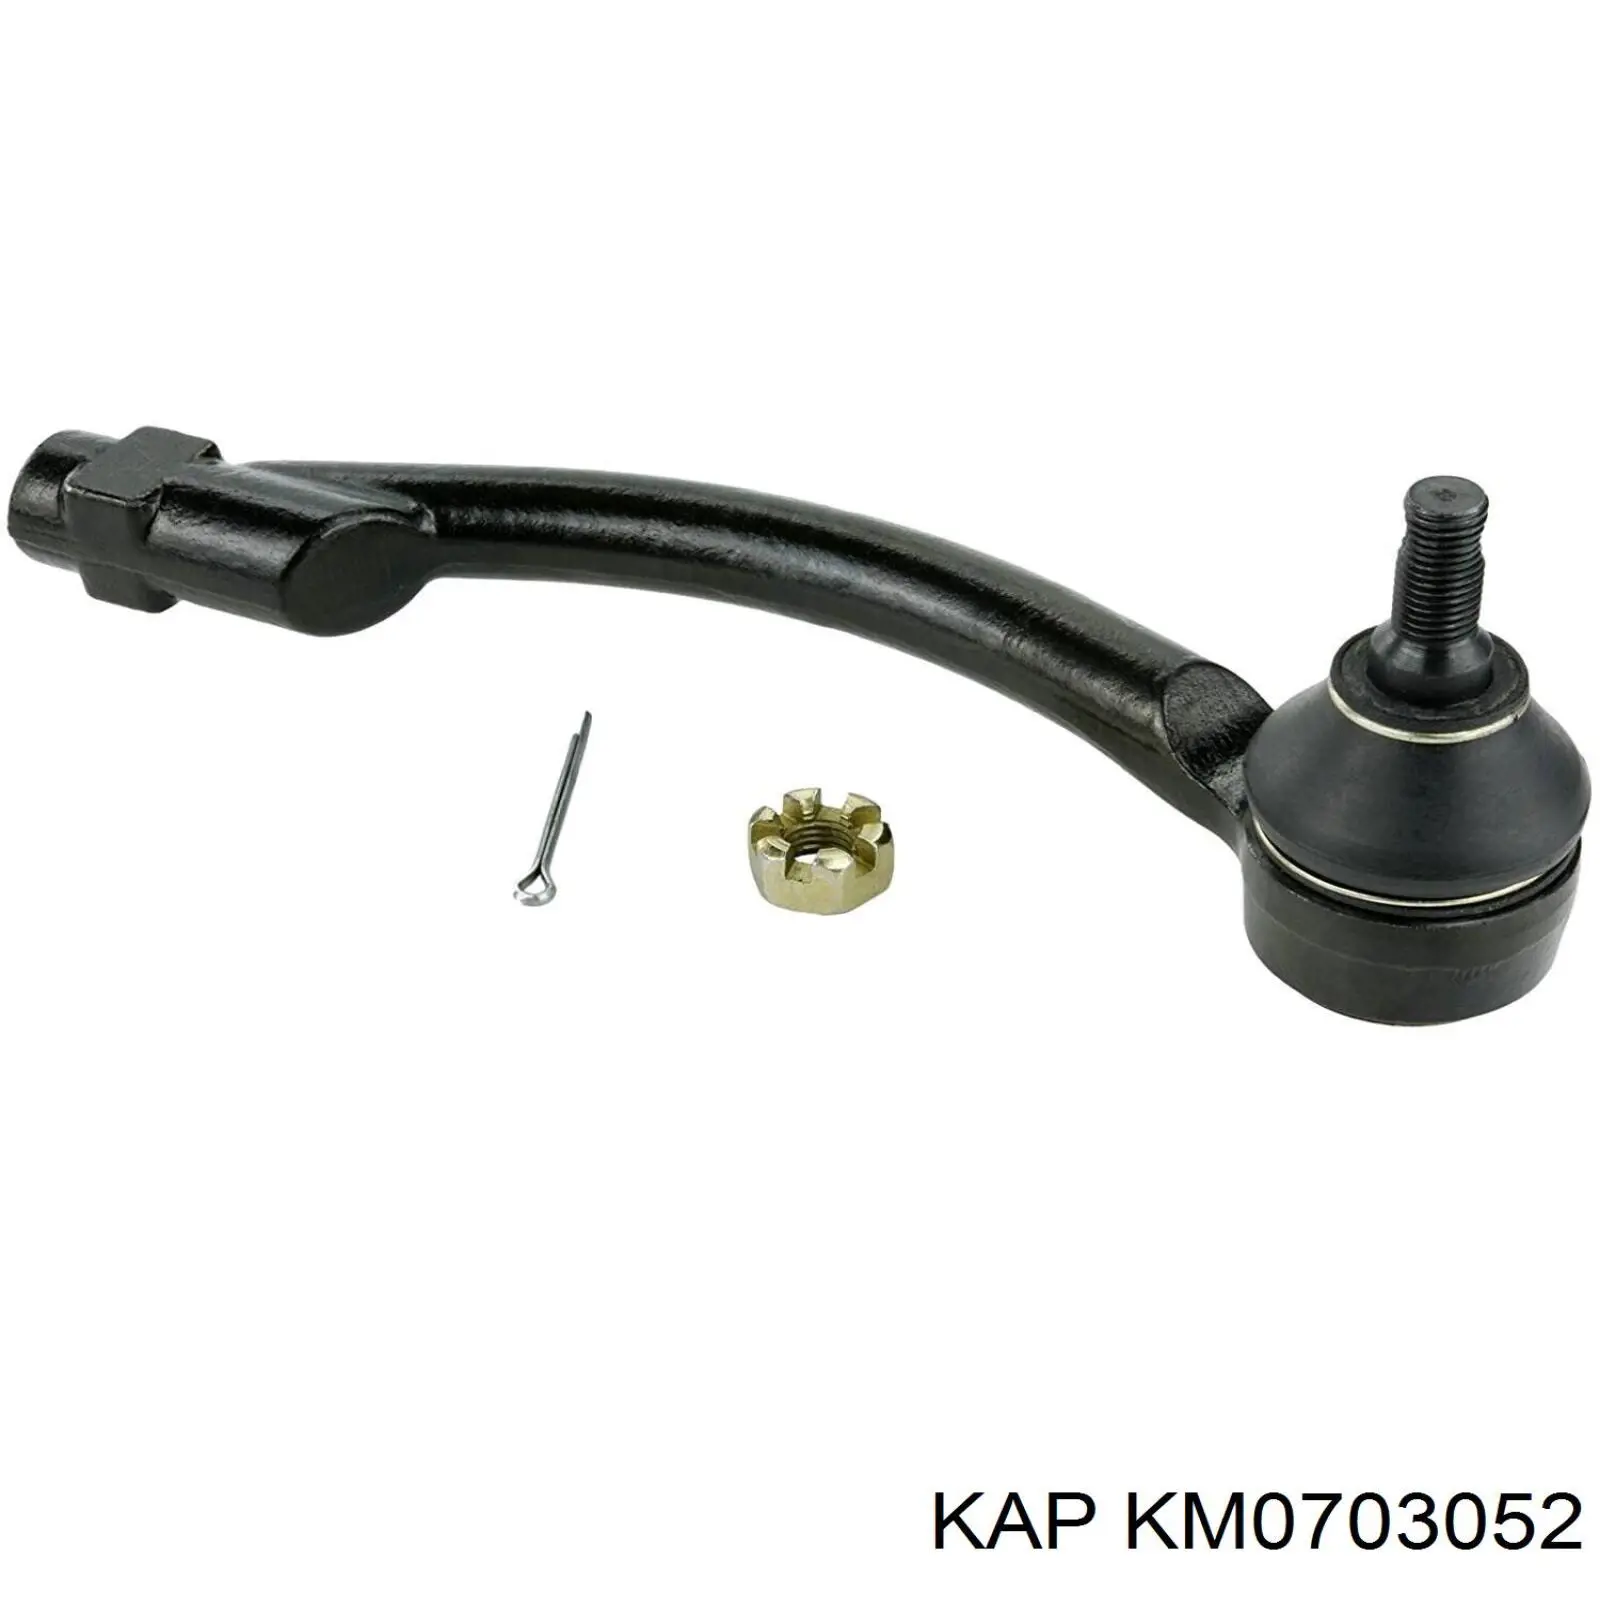 KM0703052 KAP rótula barra de acoplamiento exterior